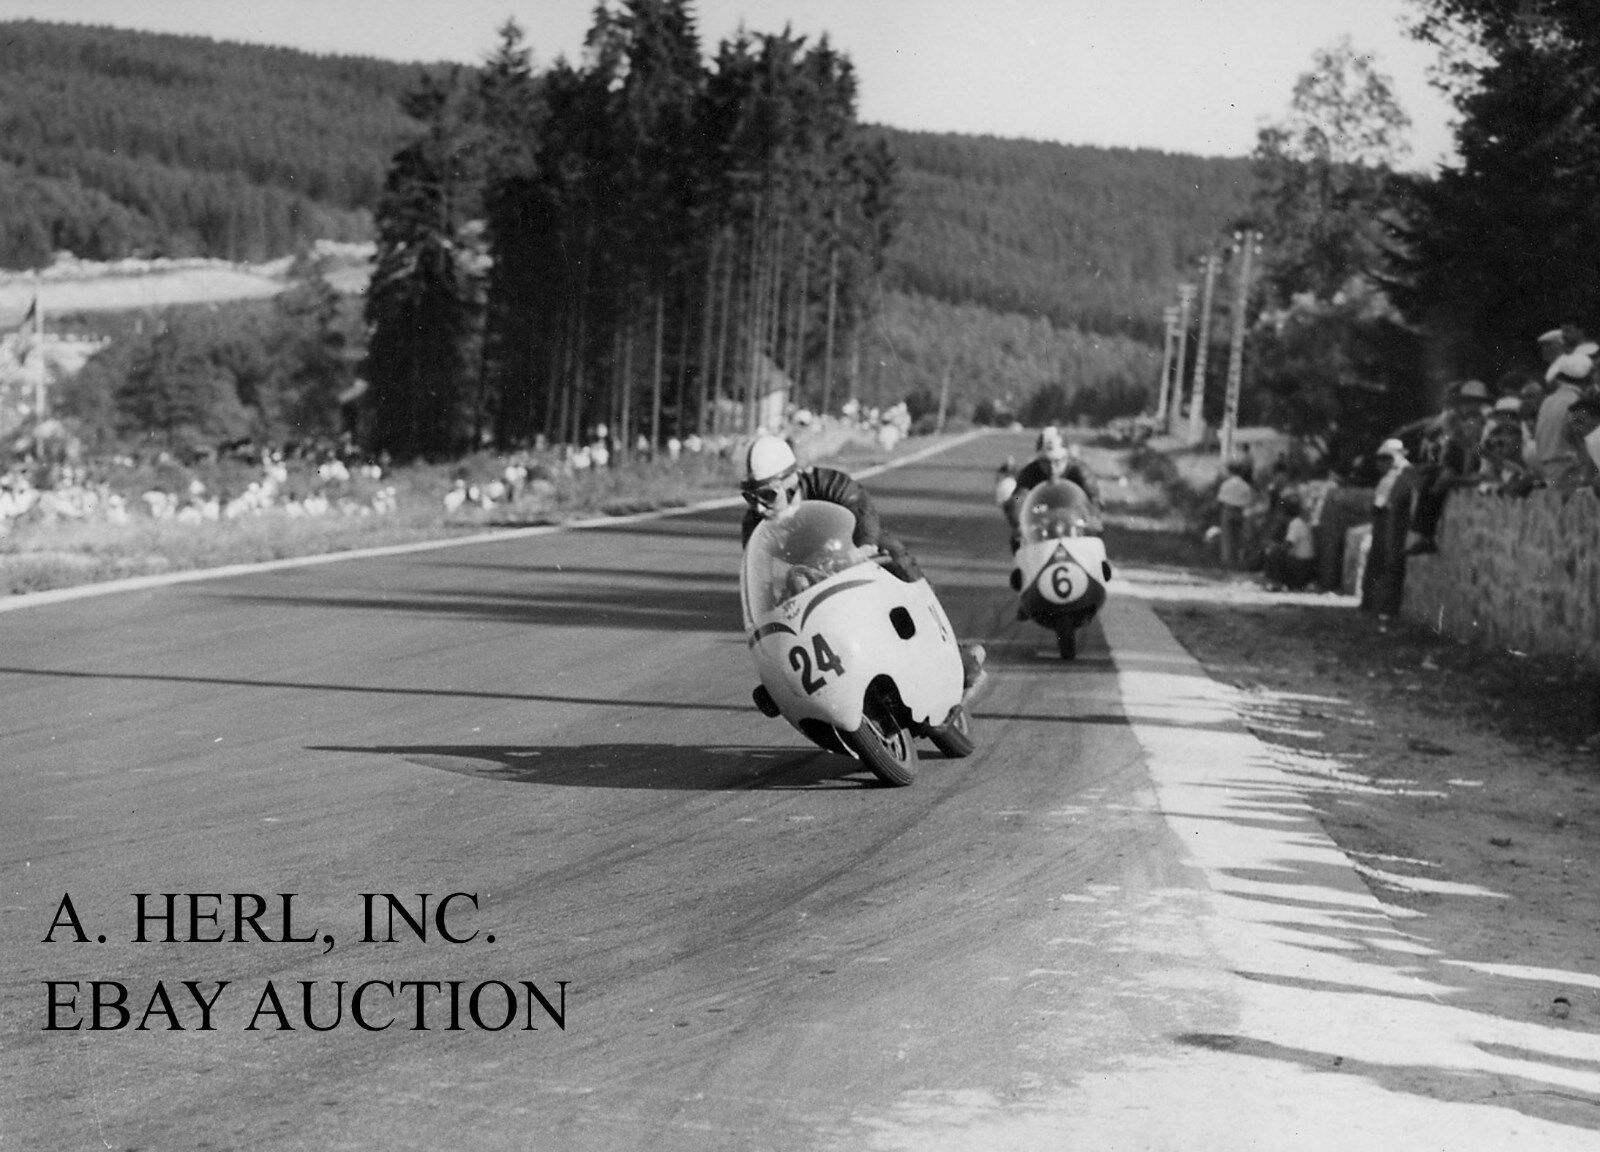 MV Agusta 500cc John Surtees motorcycle racing photo photograph